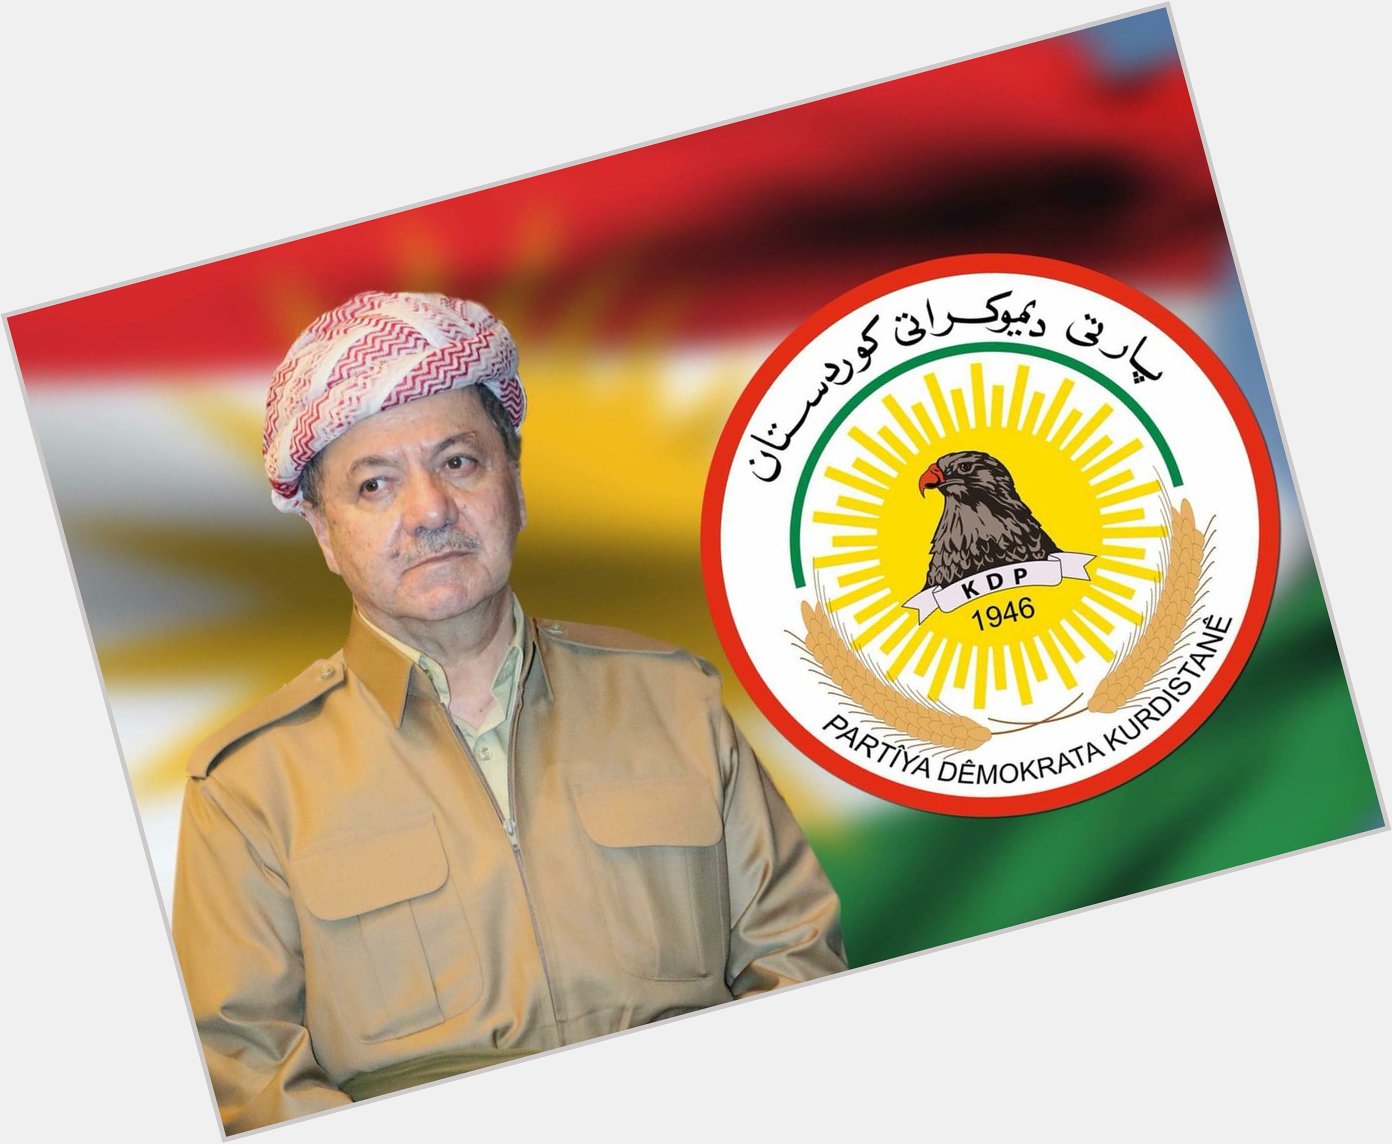 Happy birthday to our president Barzani and Happy 71th anniversary to Kurdistan Democratic Party. 